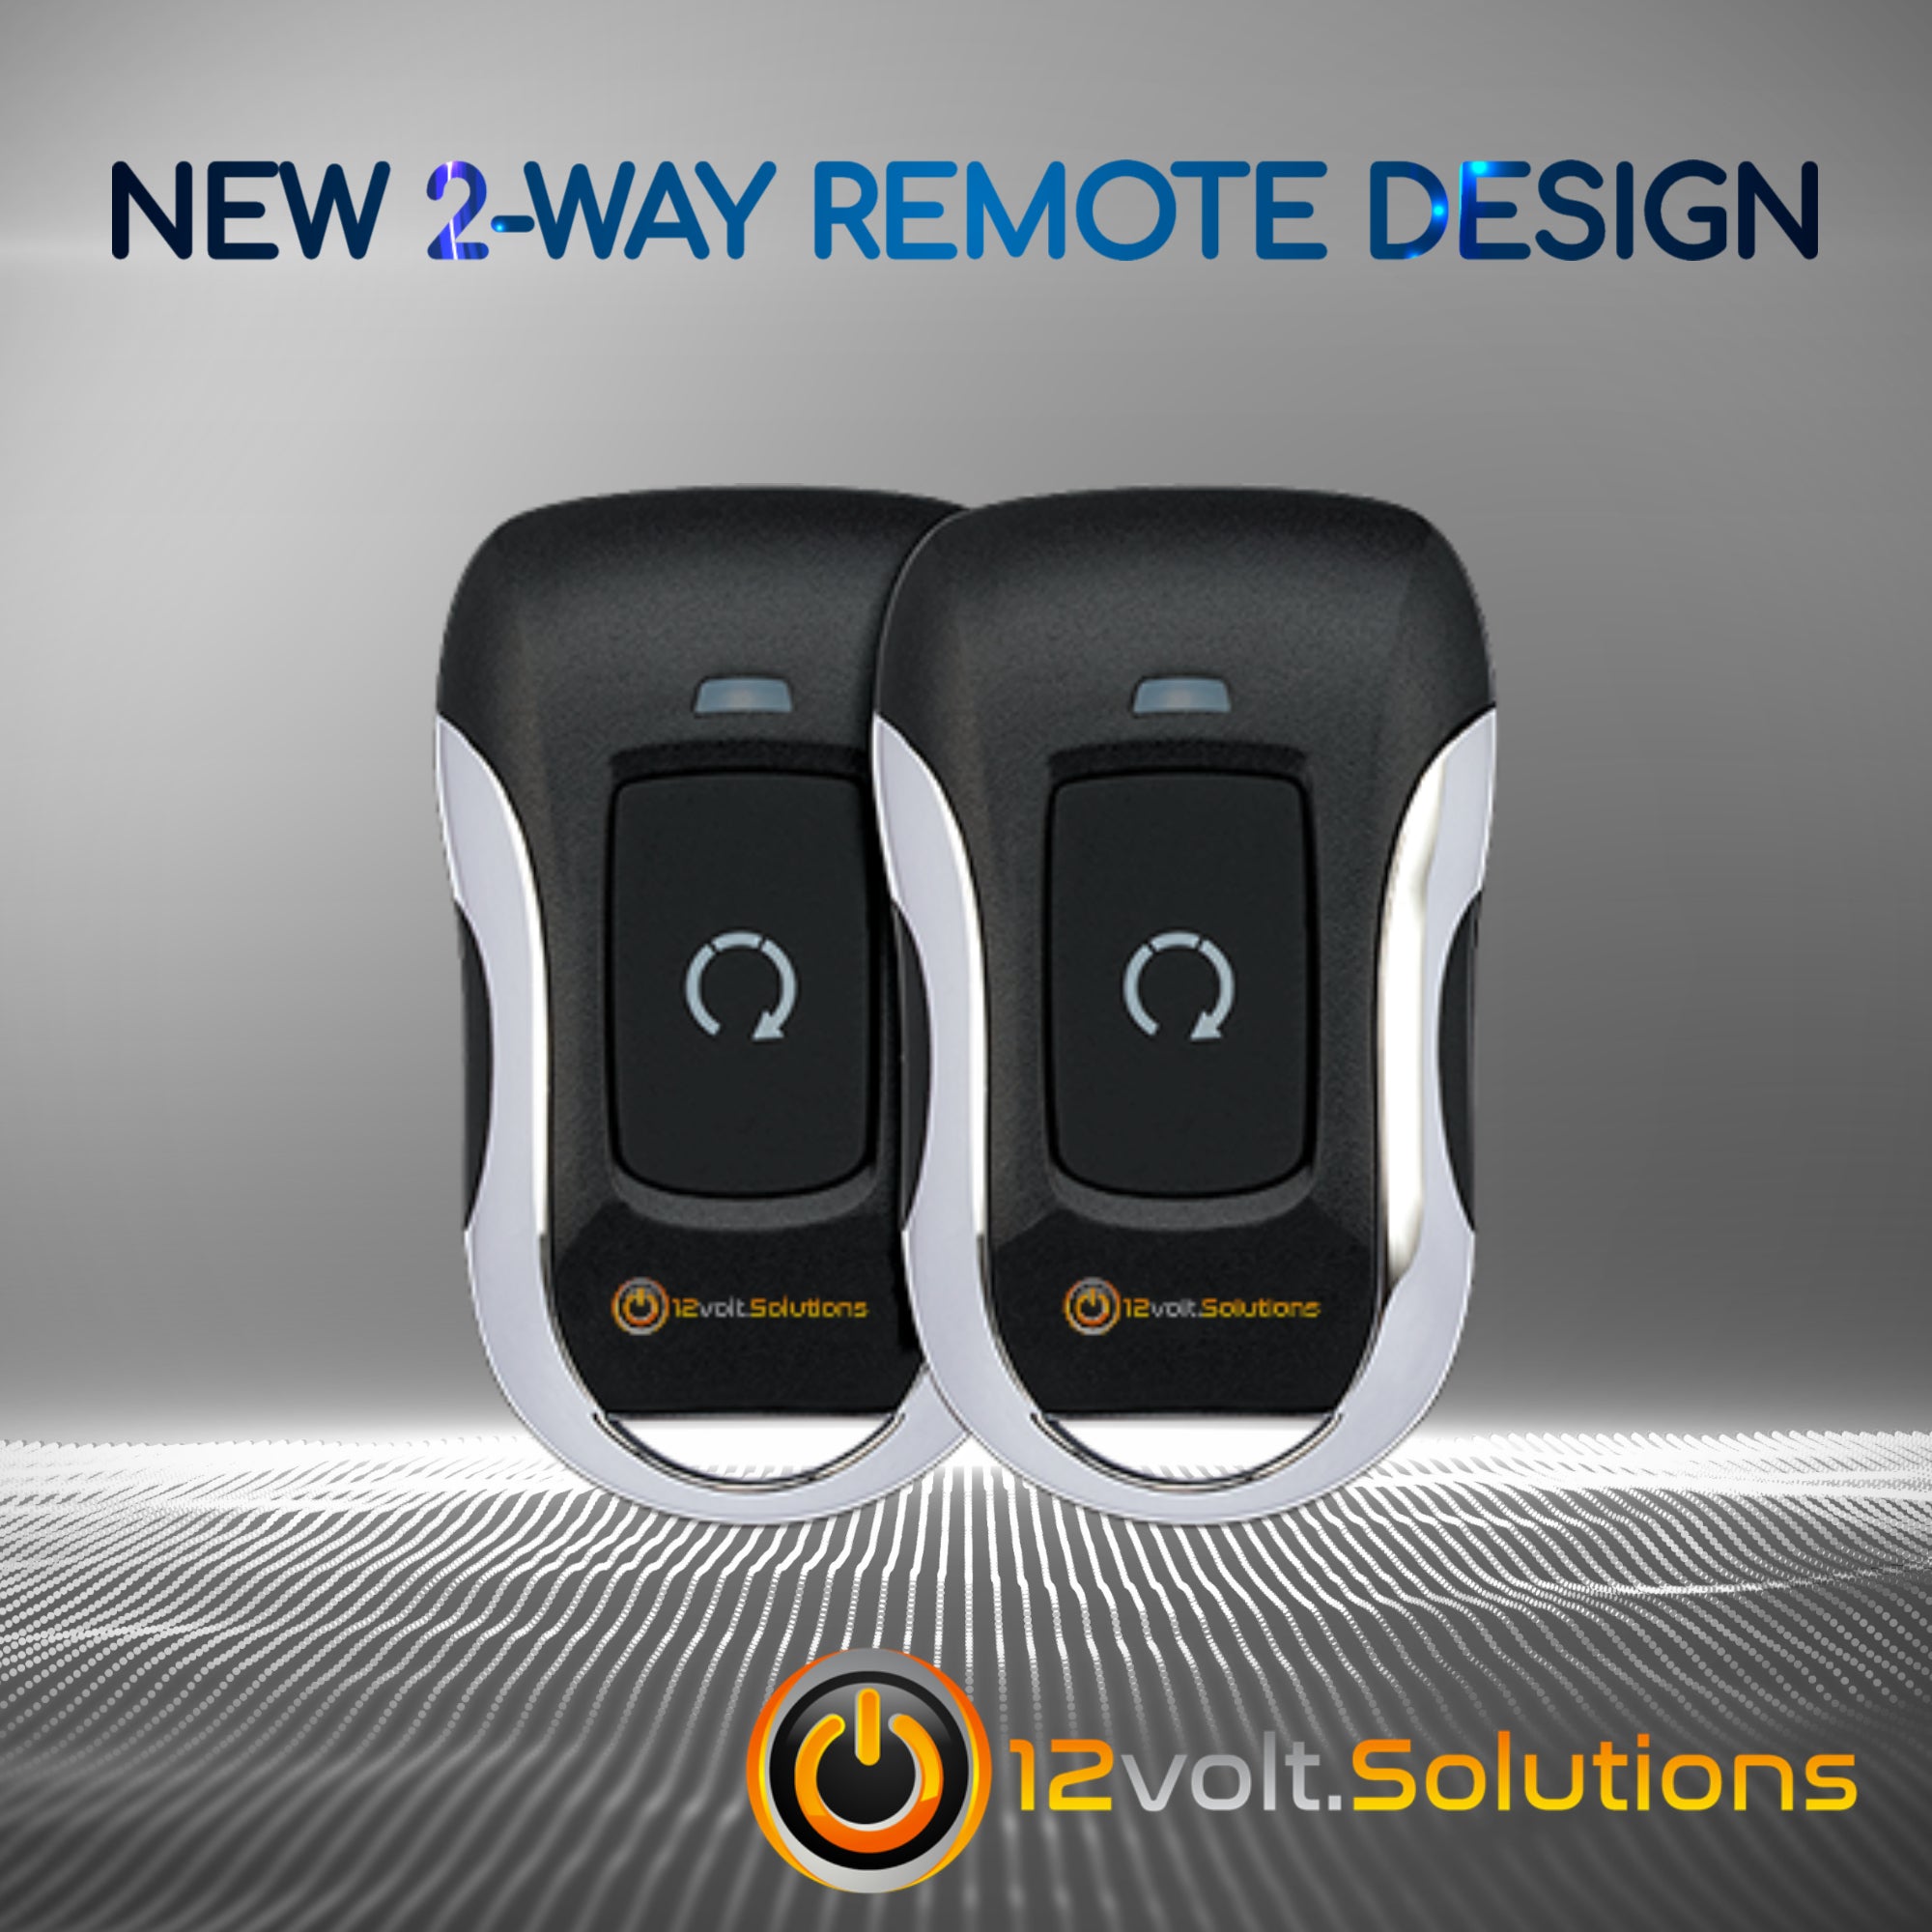 2018-2021 Buick Enclave Plug & Play Remote Start Kit (Push Button Start)-12Volt.Solutions